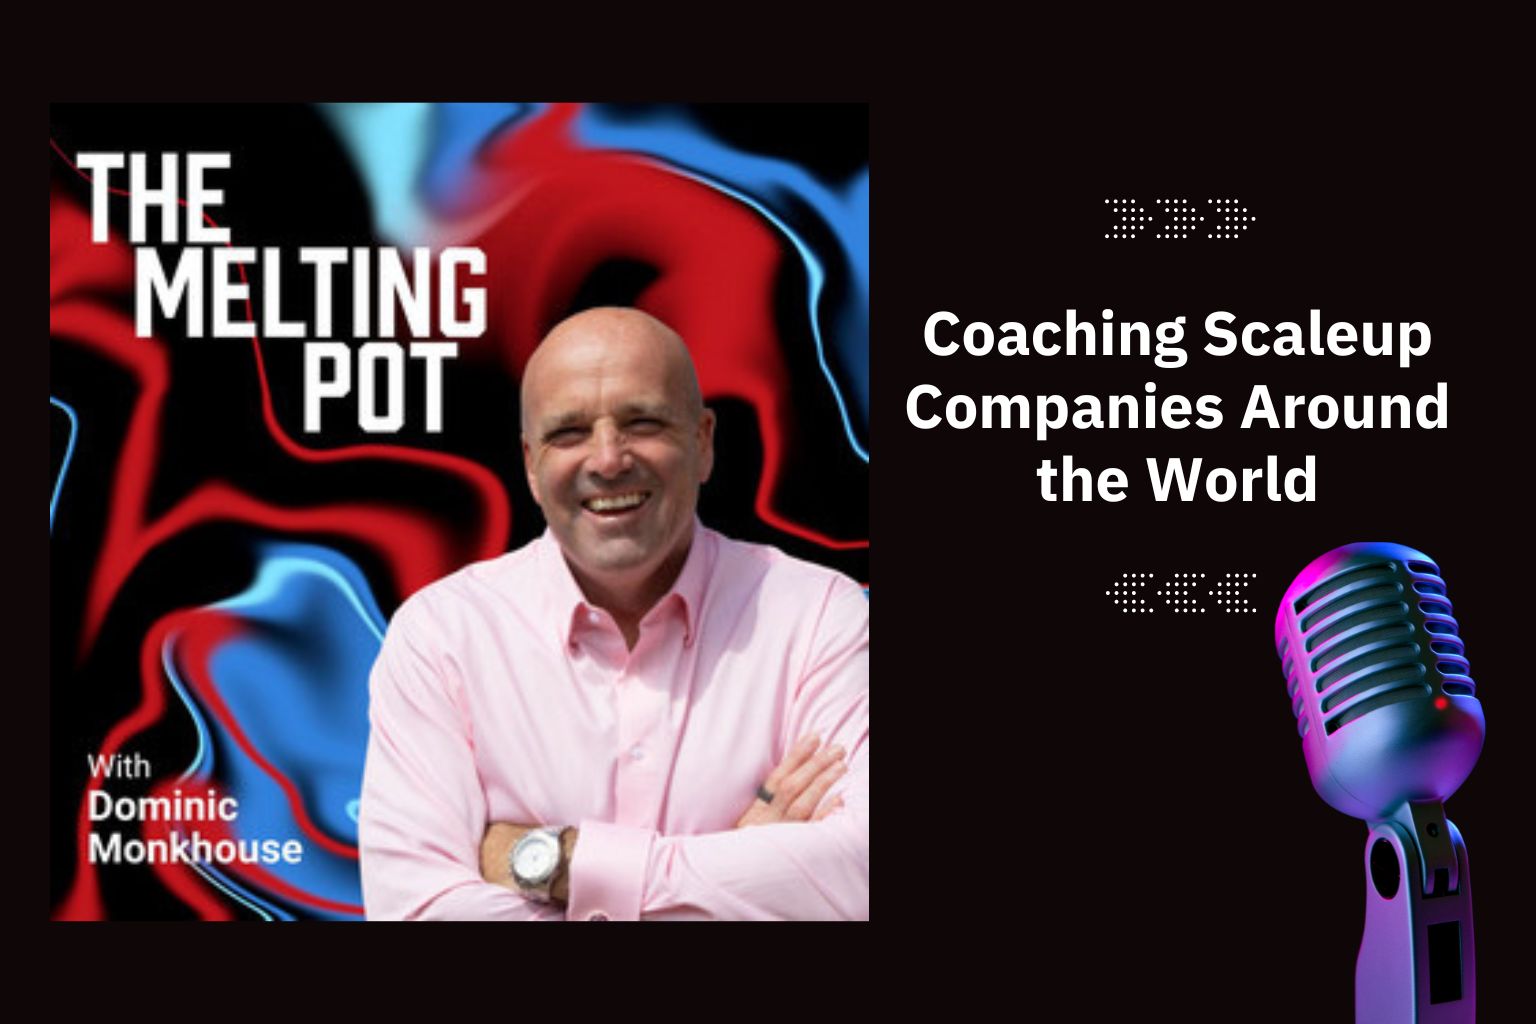 Coaching Scaleup Companies Around the World